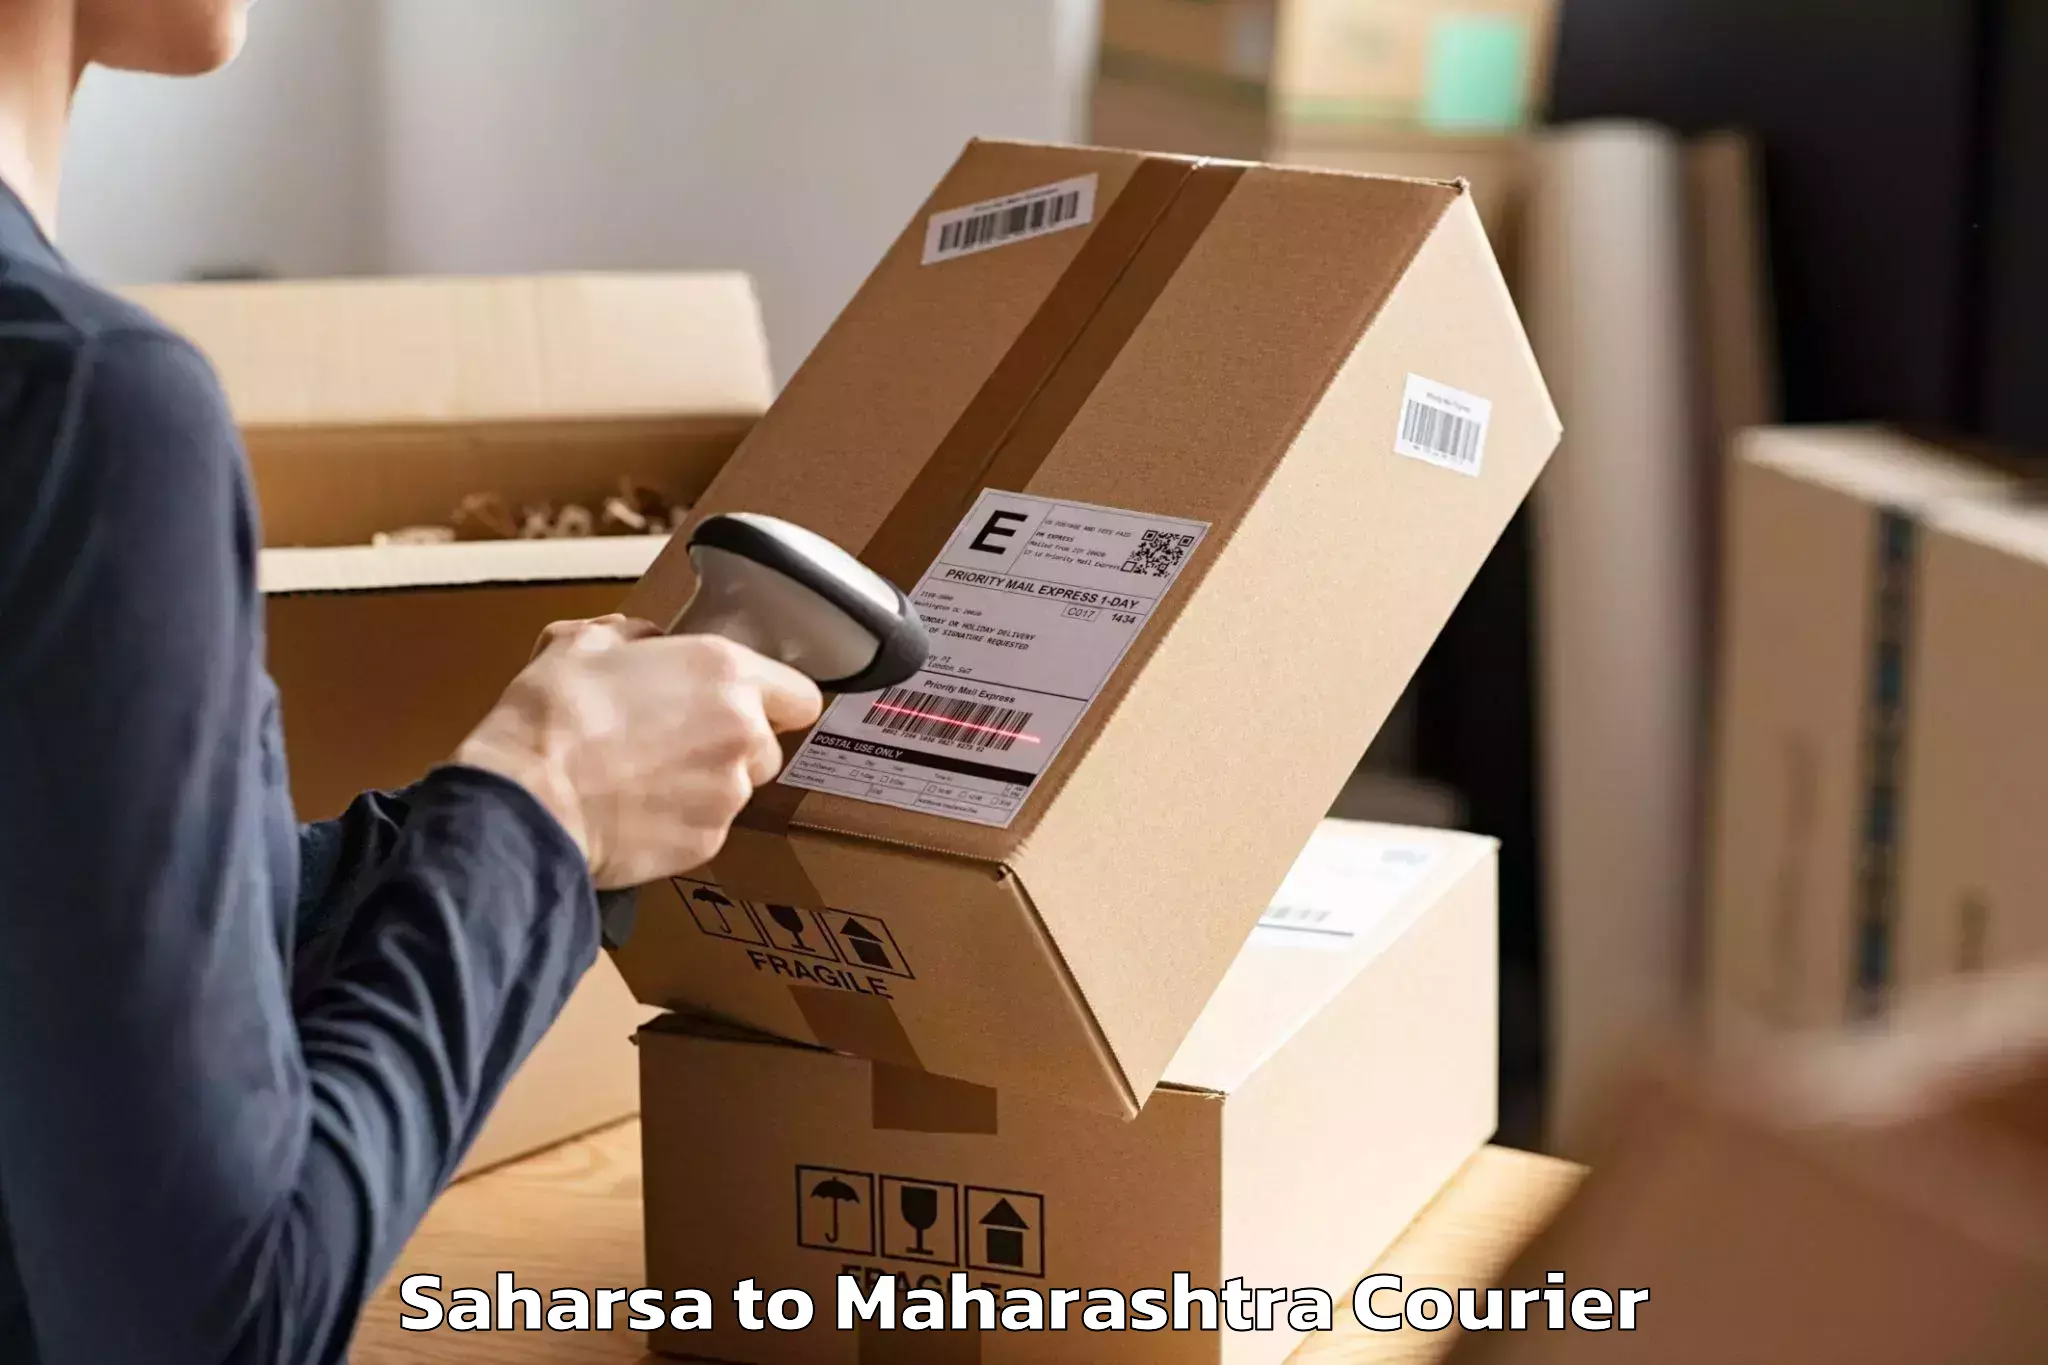 Professional moving company Saharsa to Akkalkot